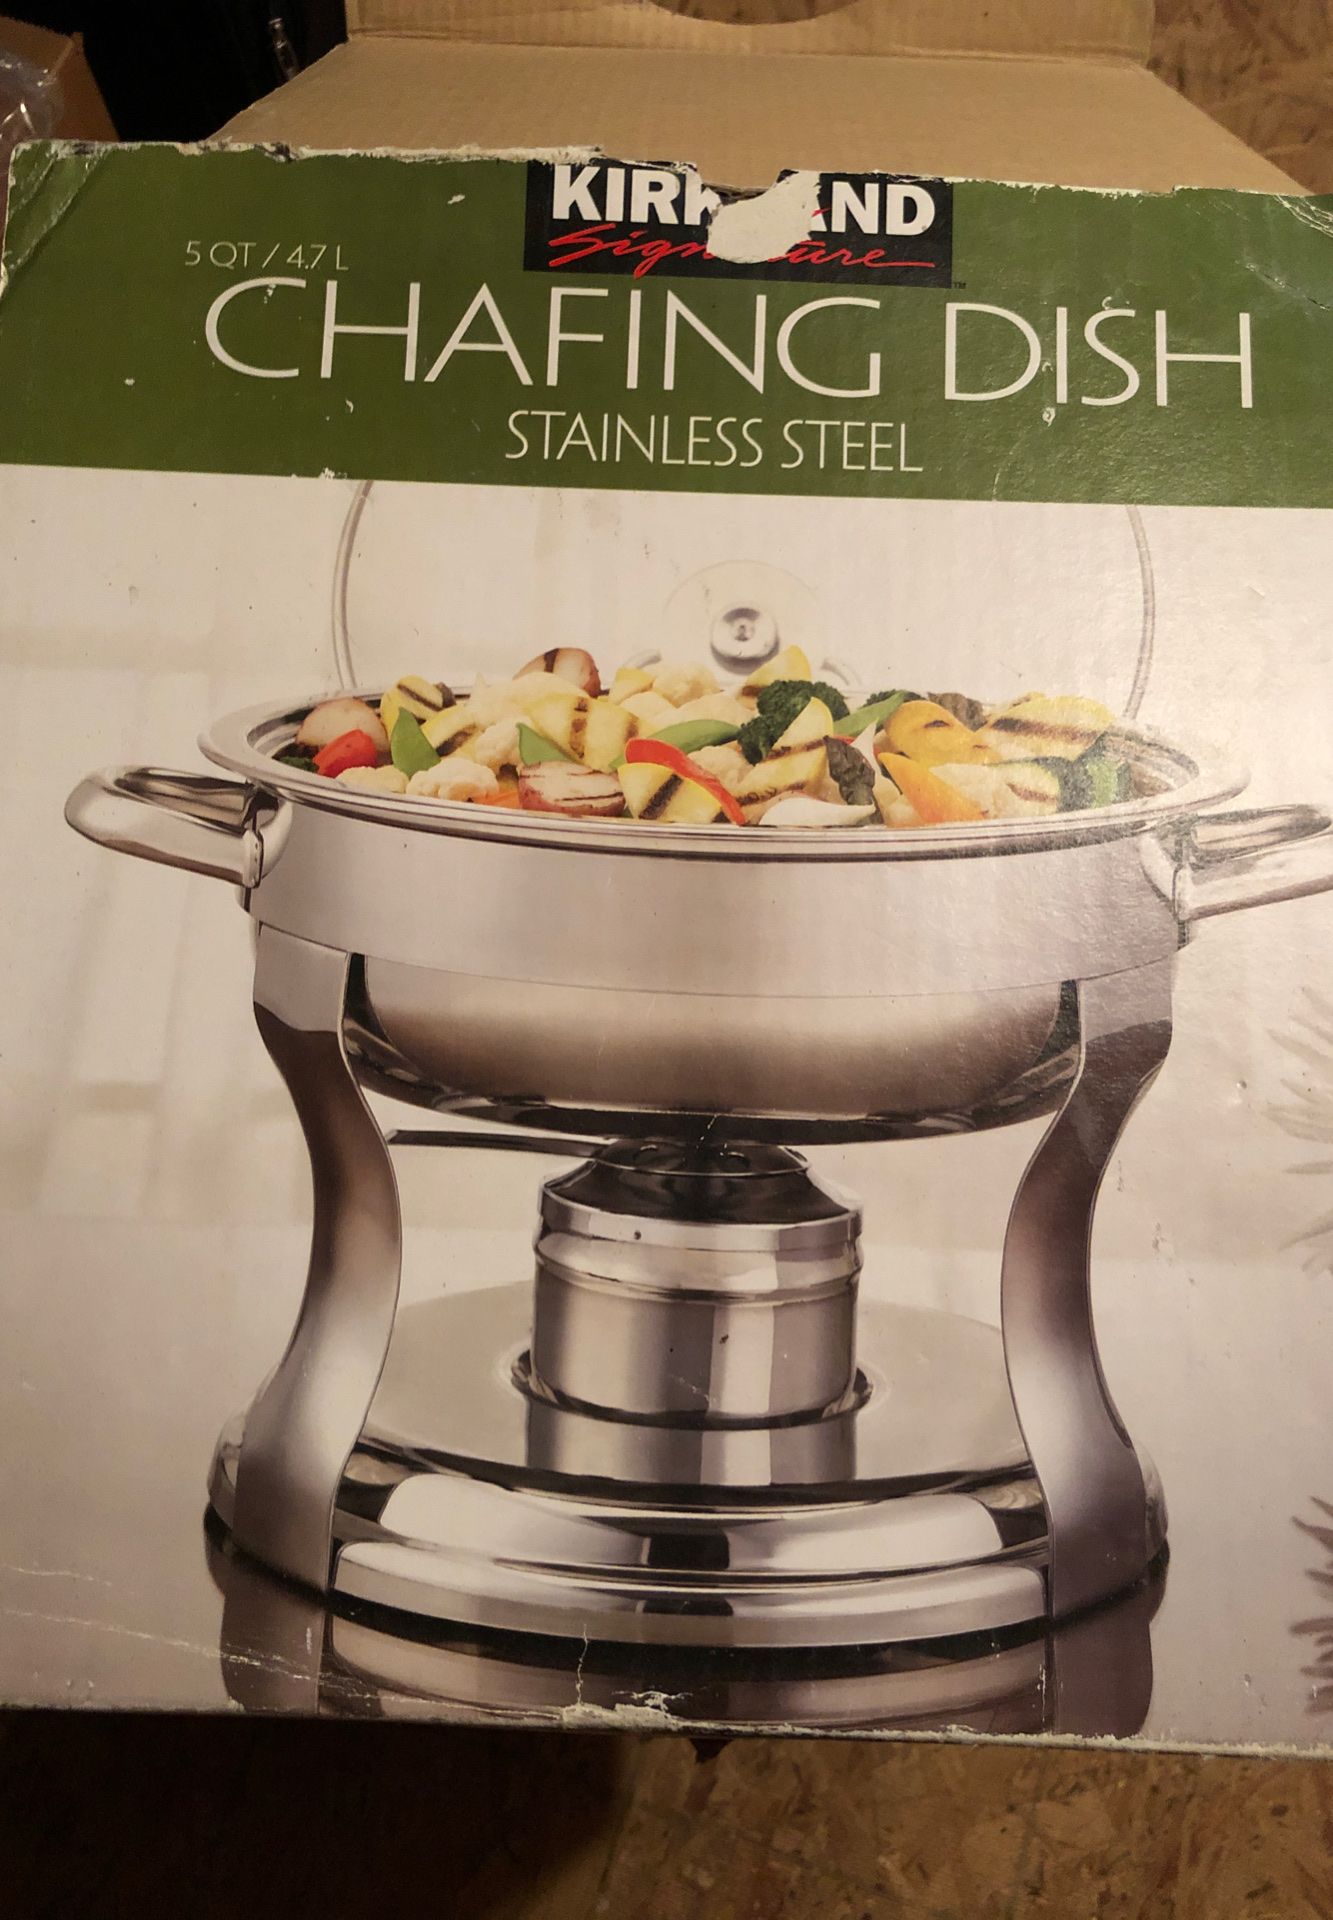 Chafing dish round size 5 quart Kirkland brand